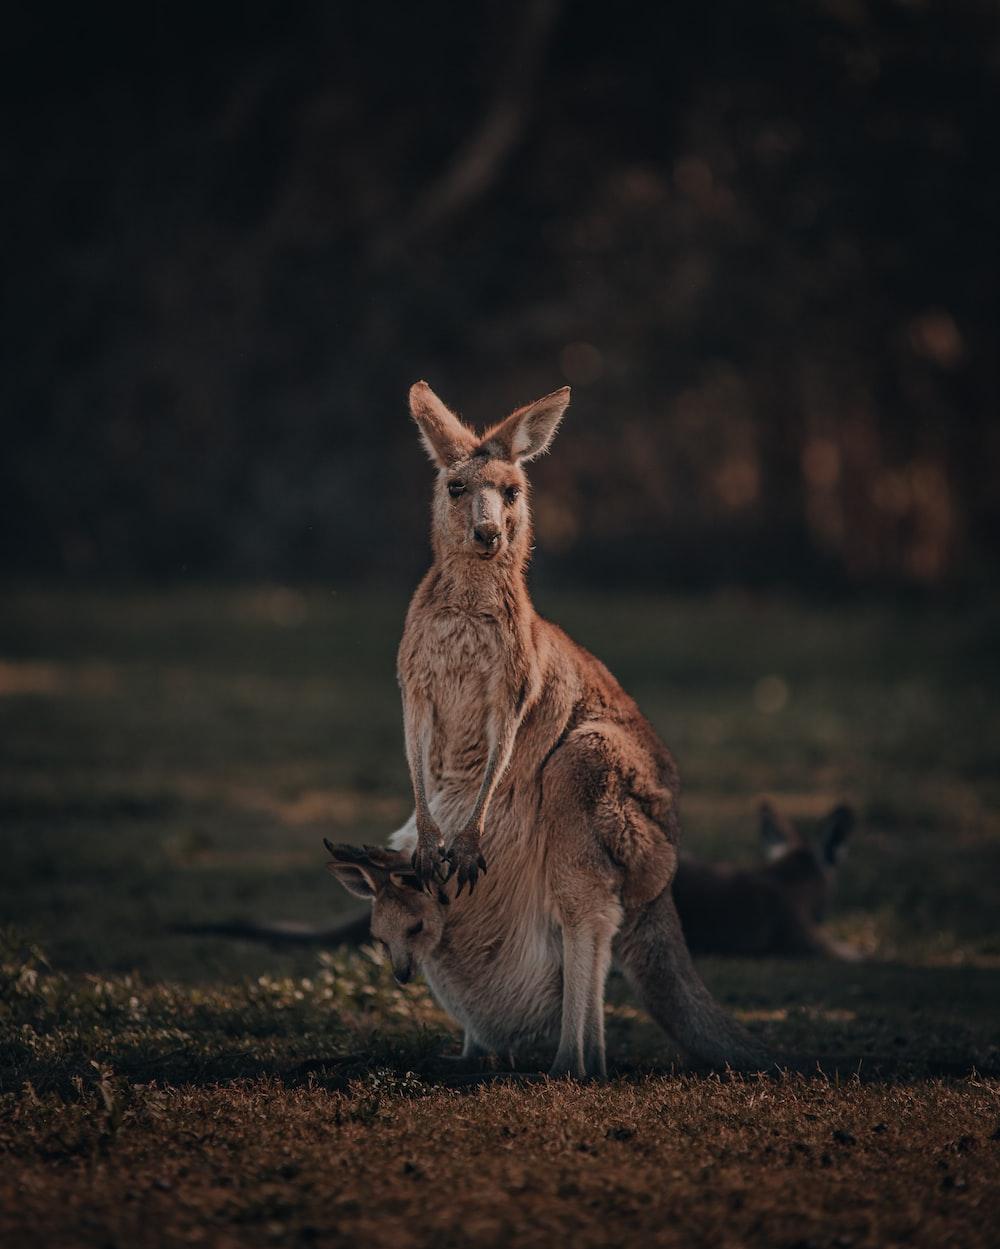 Kangaroo Pictures Image Stock Photos On